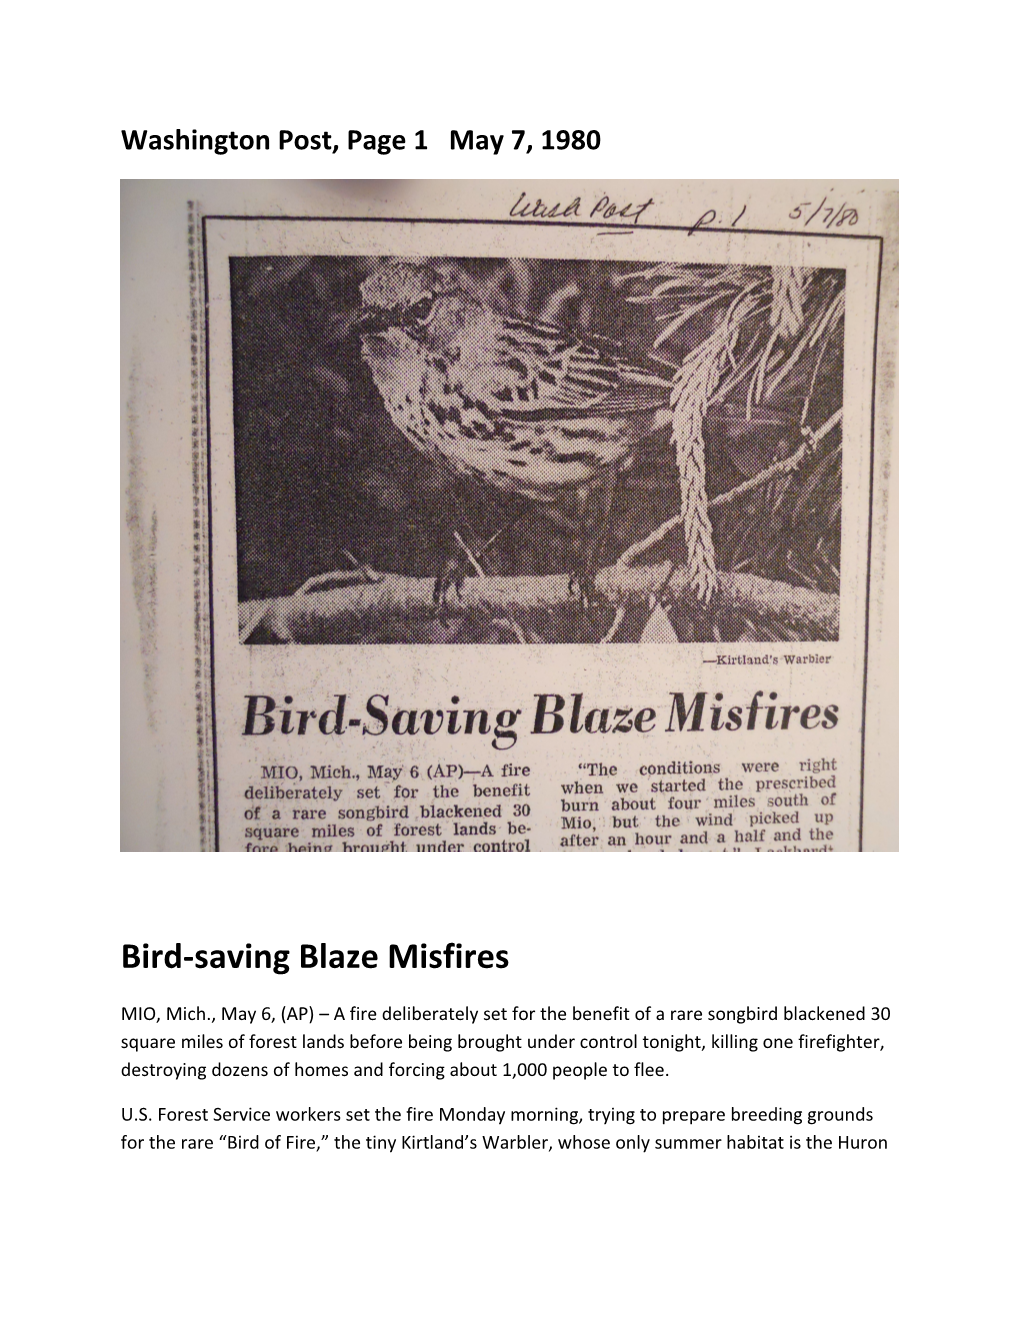 Bird-Saving Blaze Misfires s1